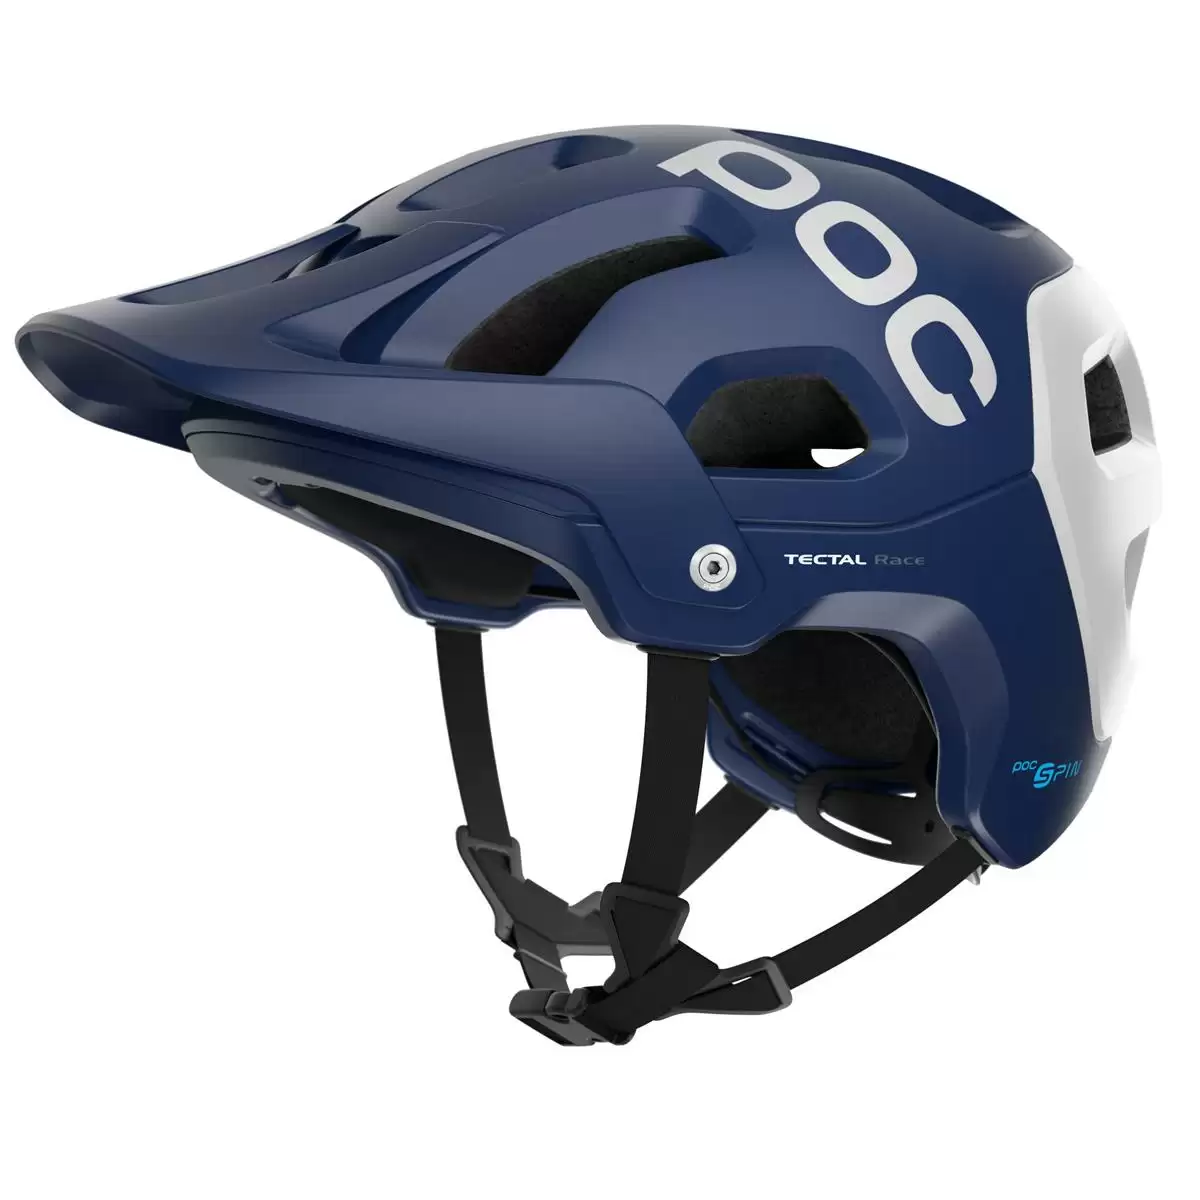 Enduro helmet Tectal Race Spin blue size XL-XXL (59-62cm) - image